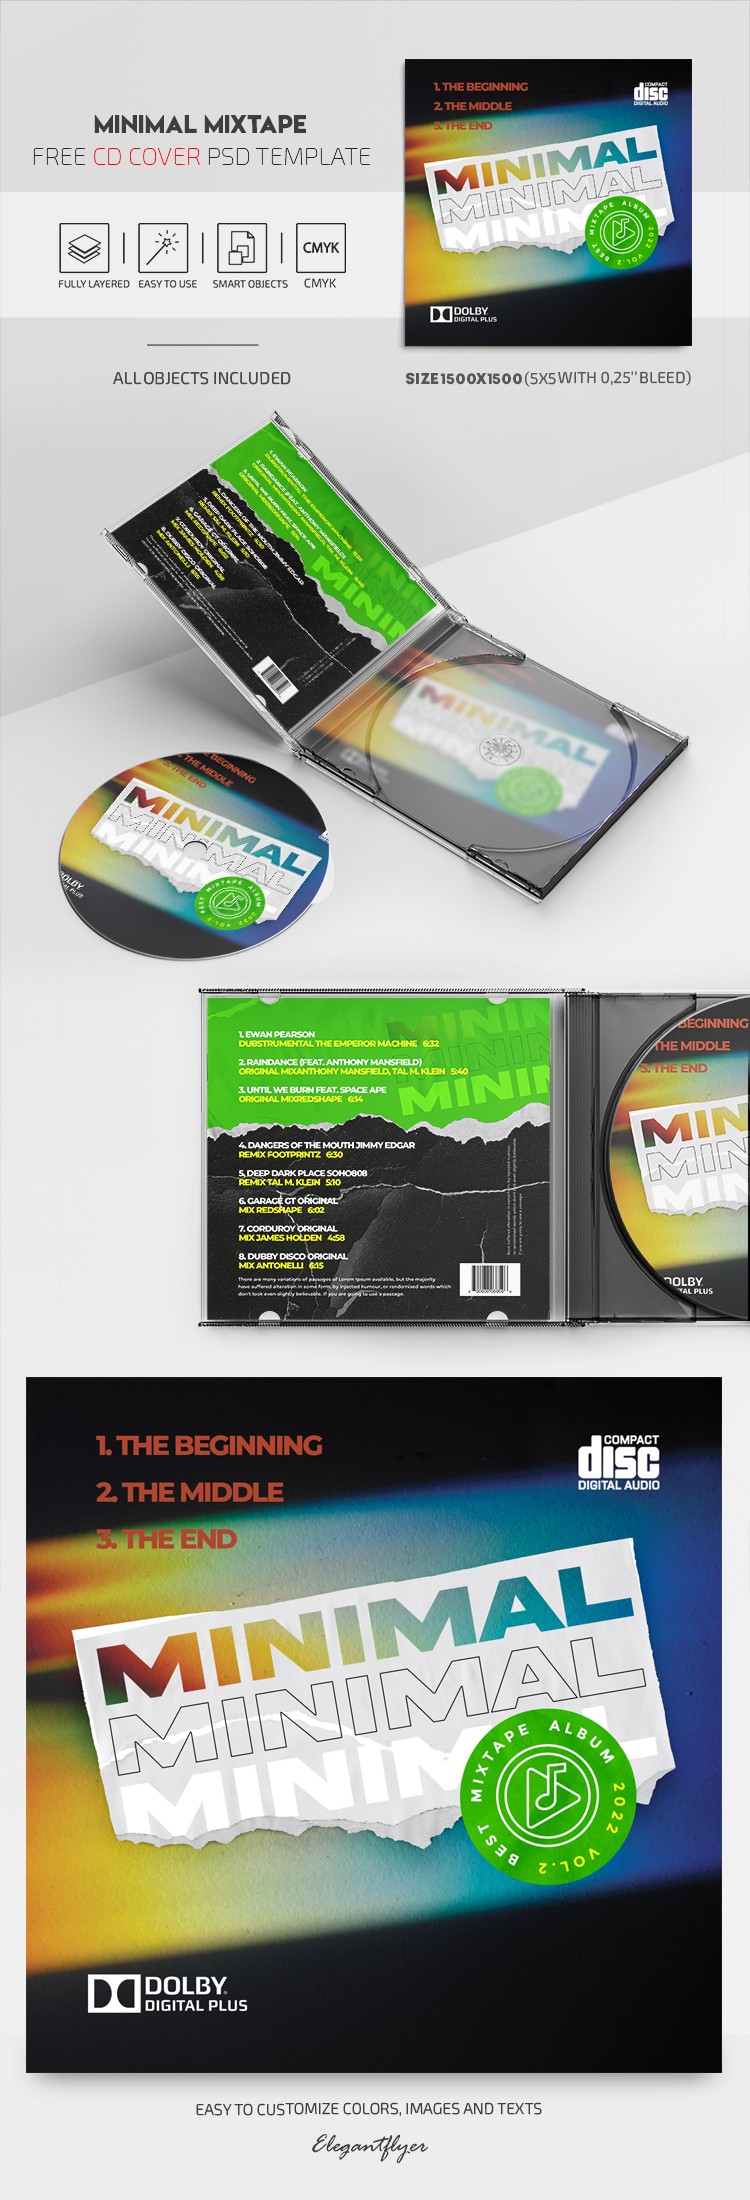 Minimal Mixtape CD Cover by ElegantFlyer